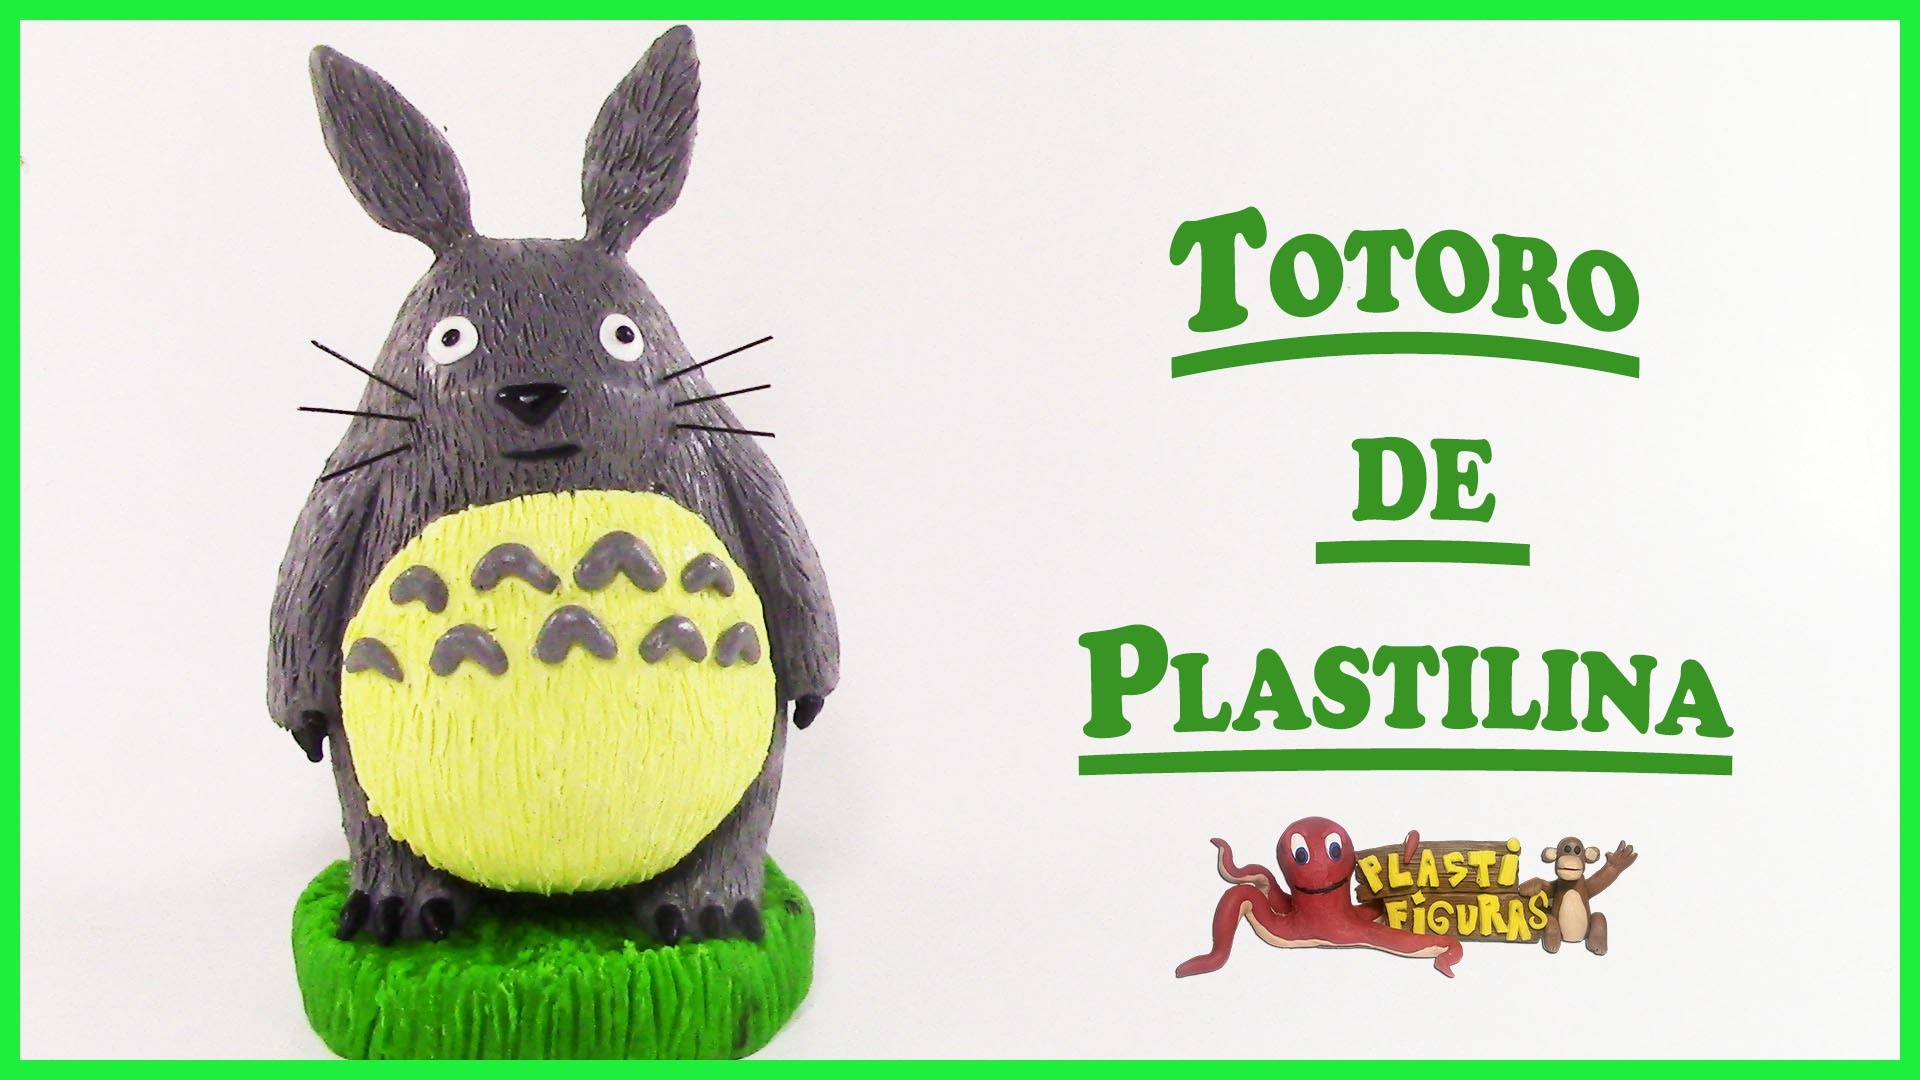 Como Hacer a Totoro de Plastilina.Porcelana Fria.How to Make Totoro with Plasticine.Clay